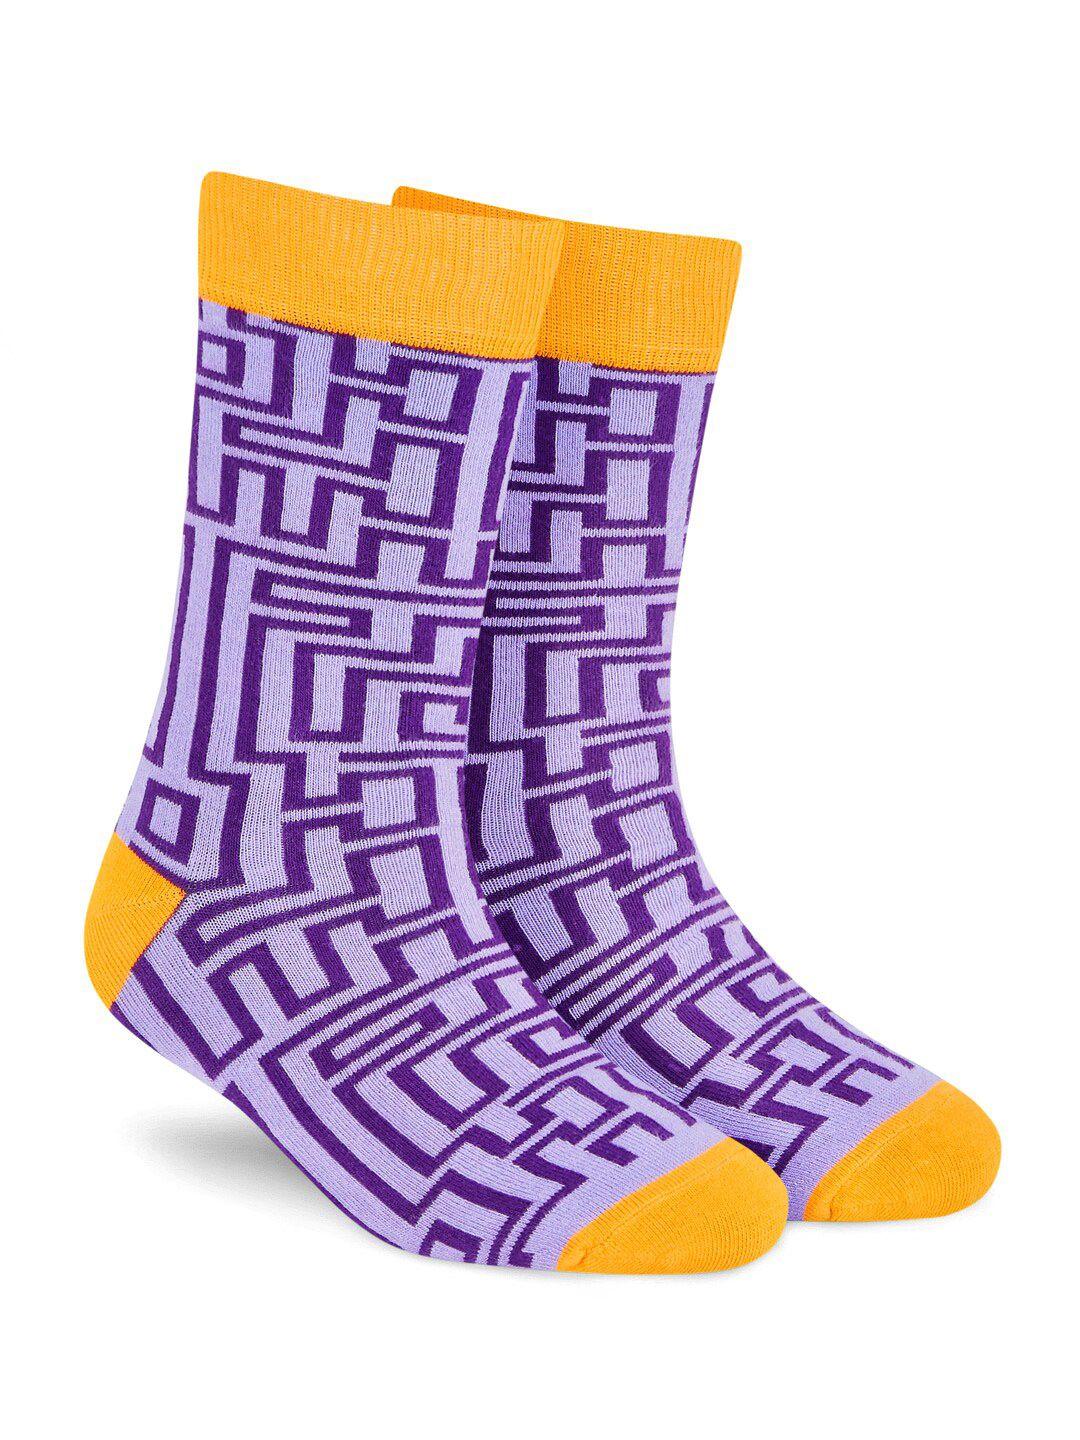 dynamocks unisex purple & yellow patterned calf-length socks